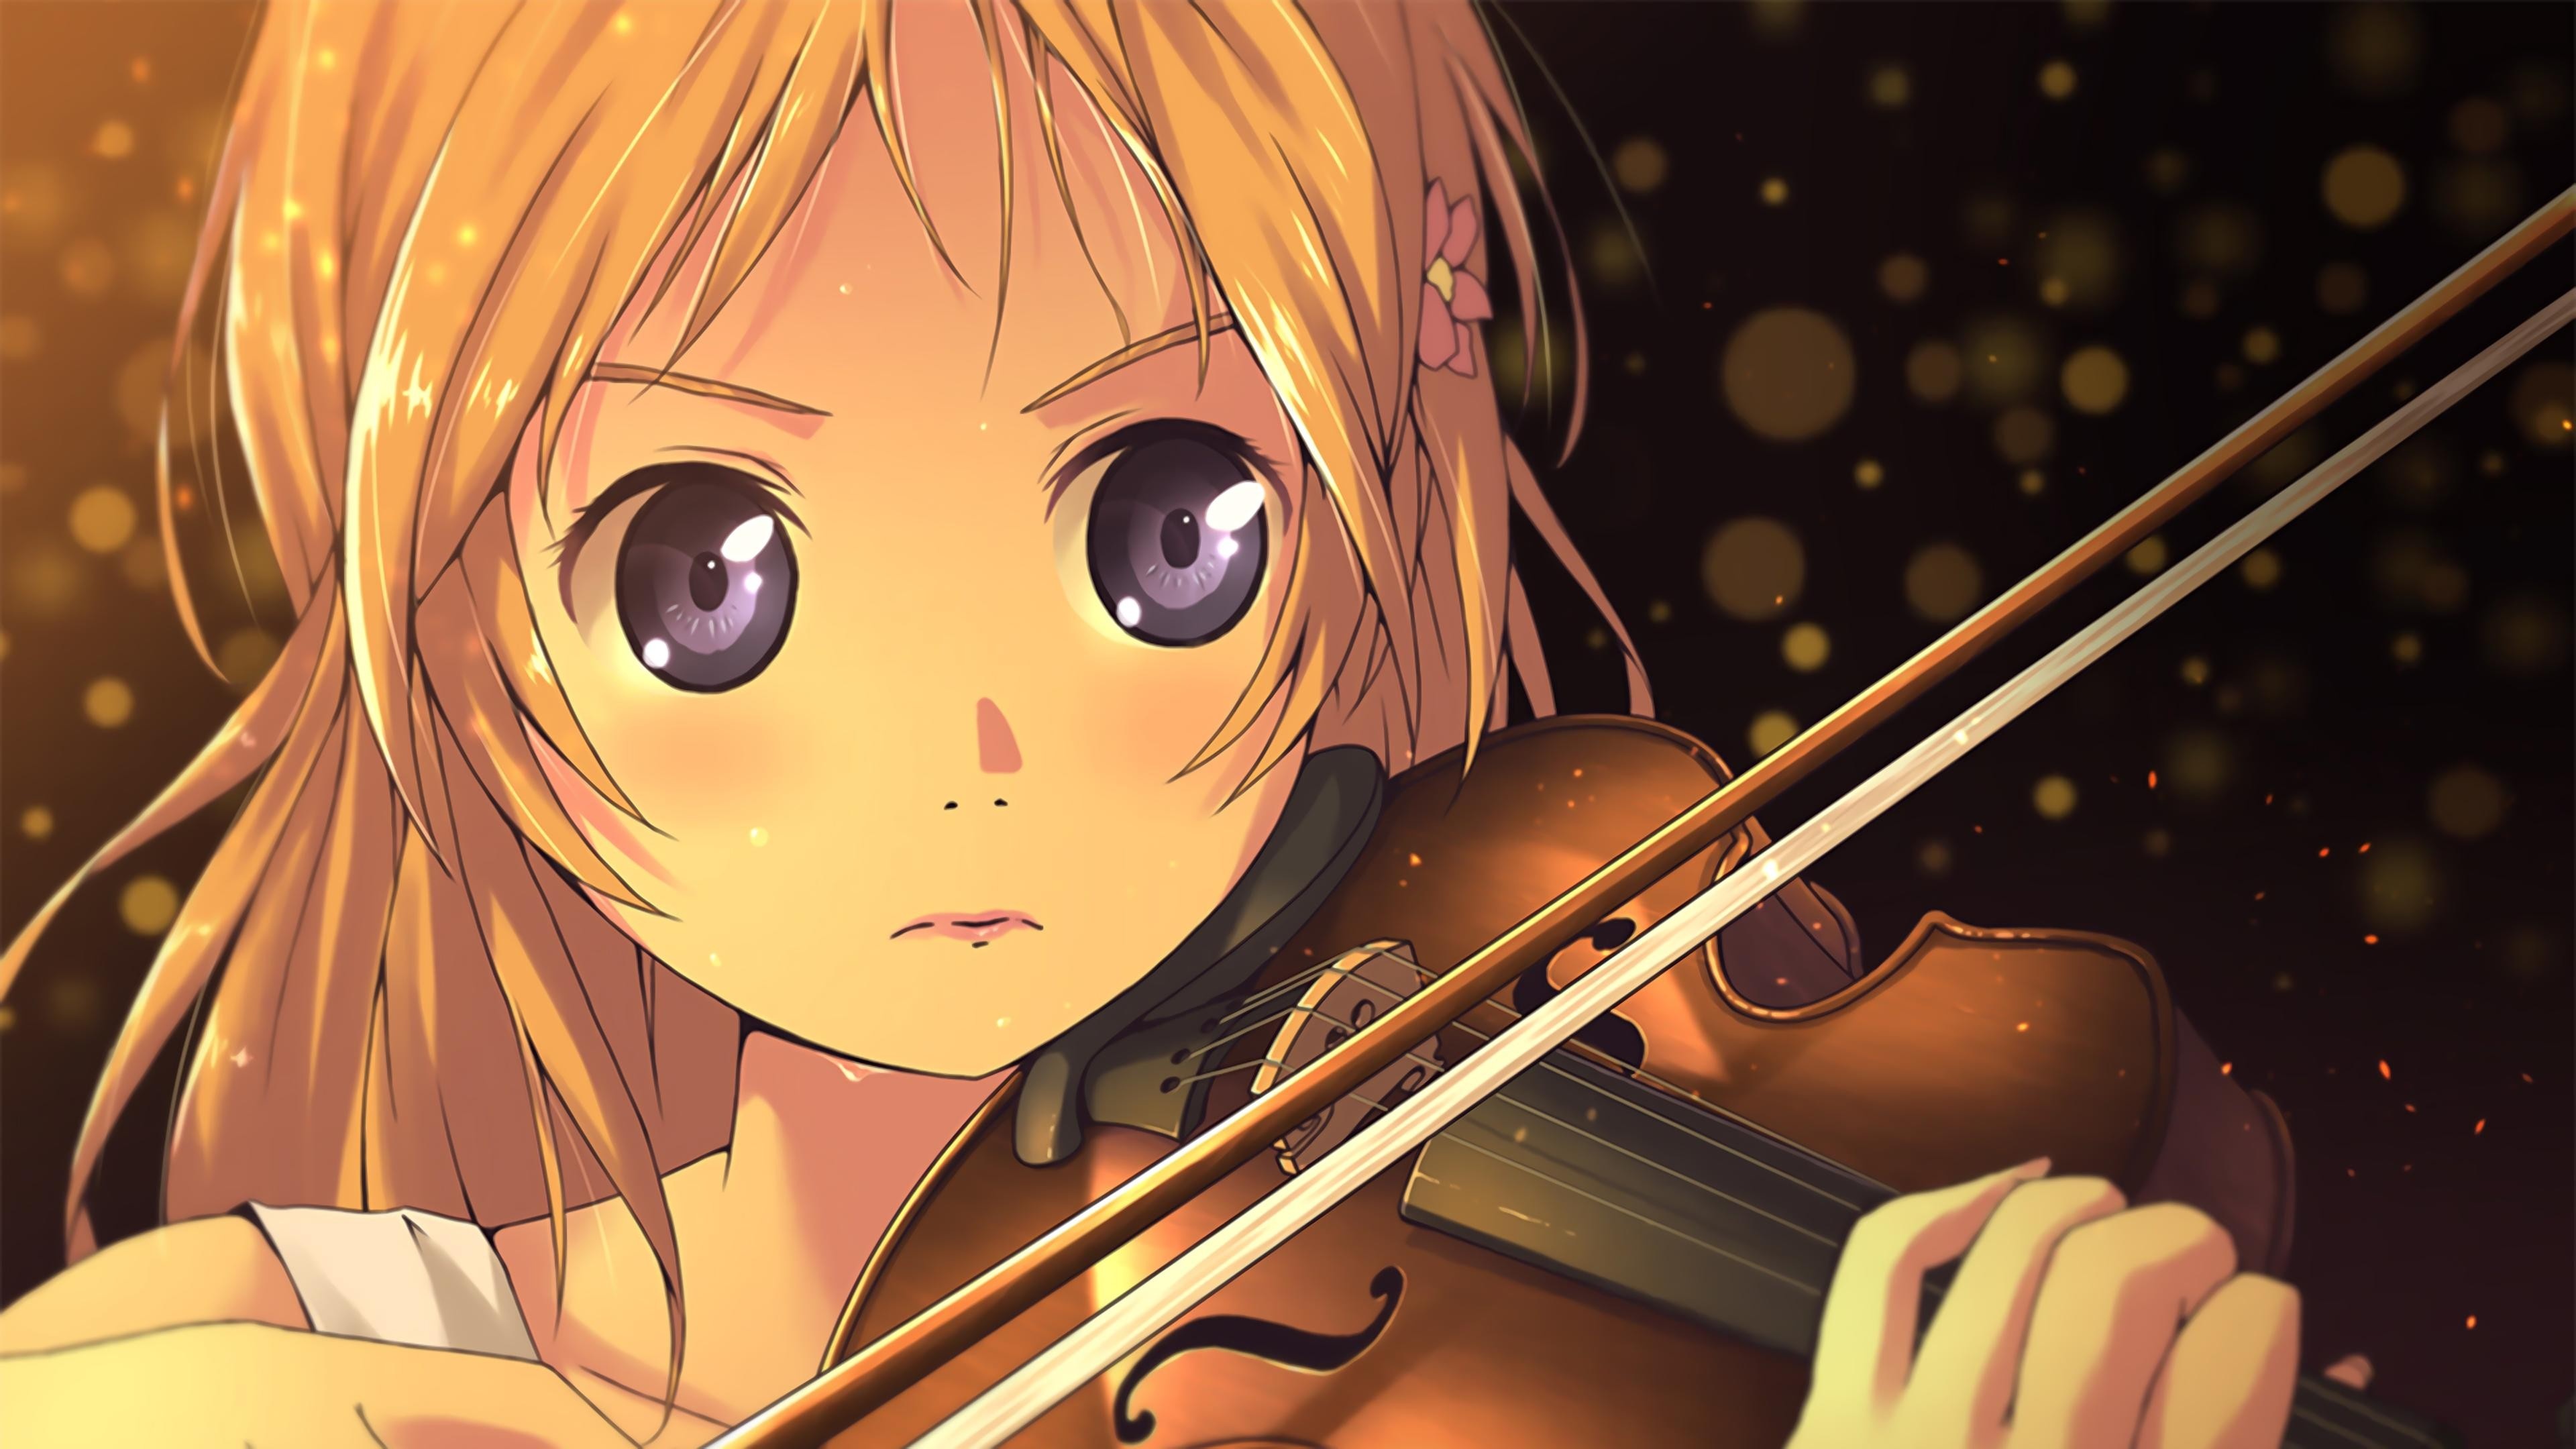 Violin: Your Lie In April, Japanese Romantic Drama Manga Series, By Naoshi Arakawa, String Instrument. 3840x2160 4K Background.